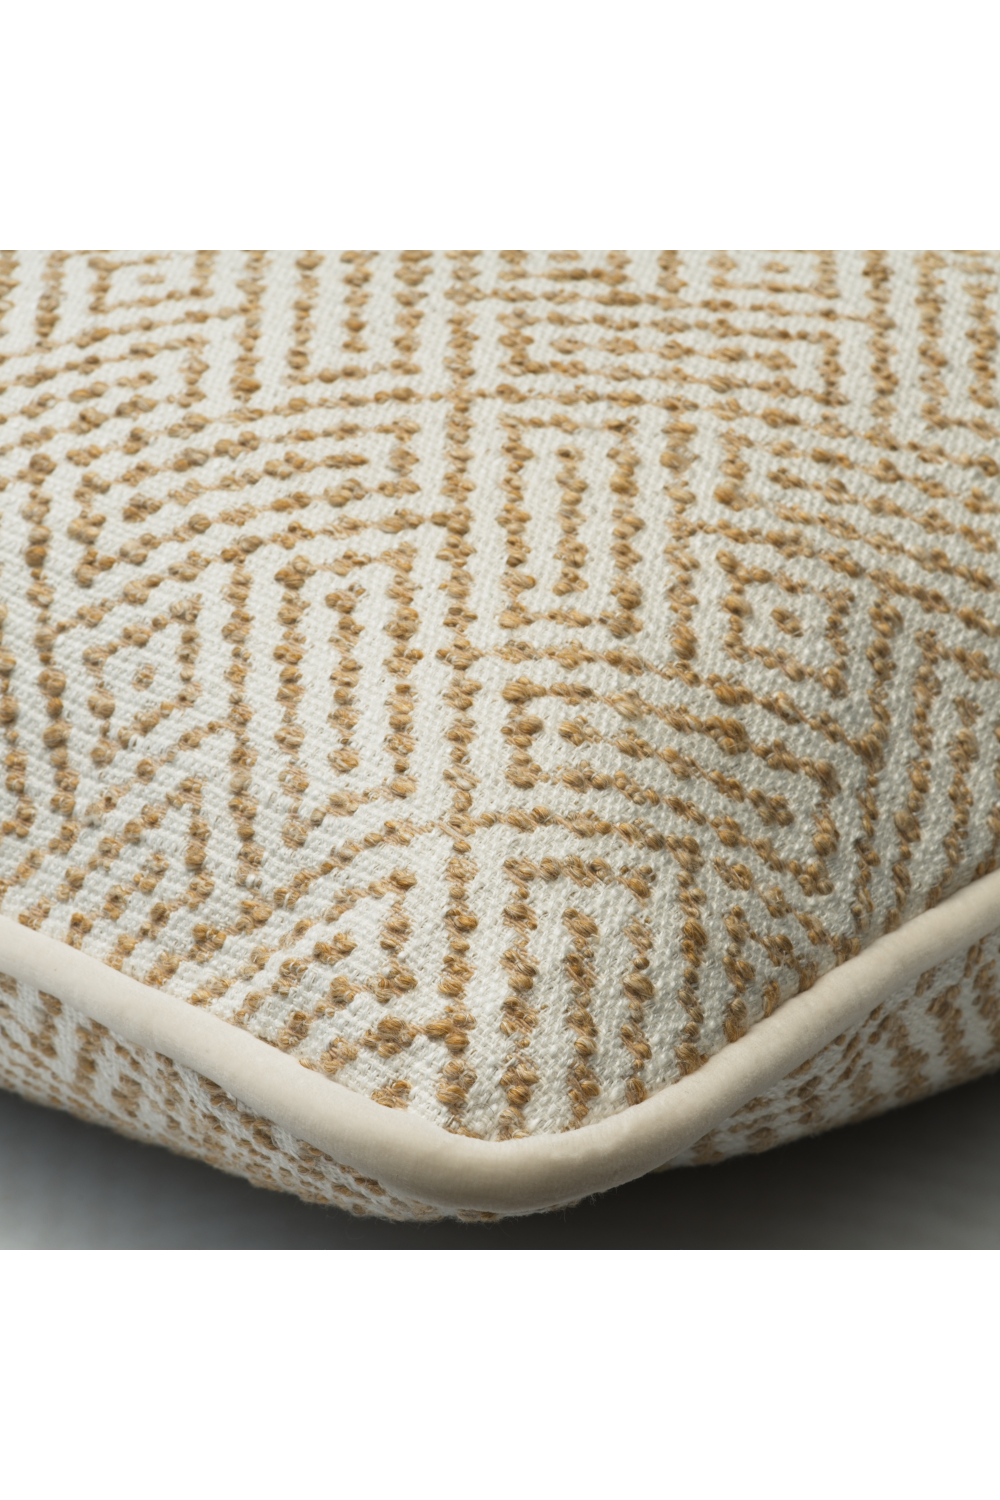 Geometric Patterned Cushion | Andrew Martin Driftwood | Oroa.com